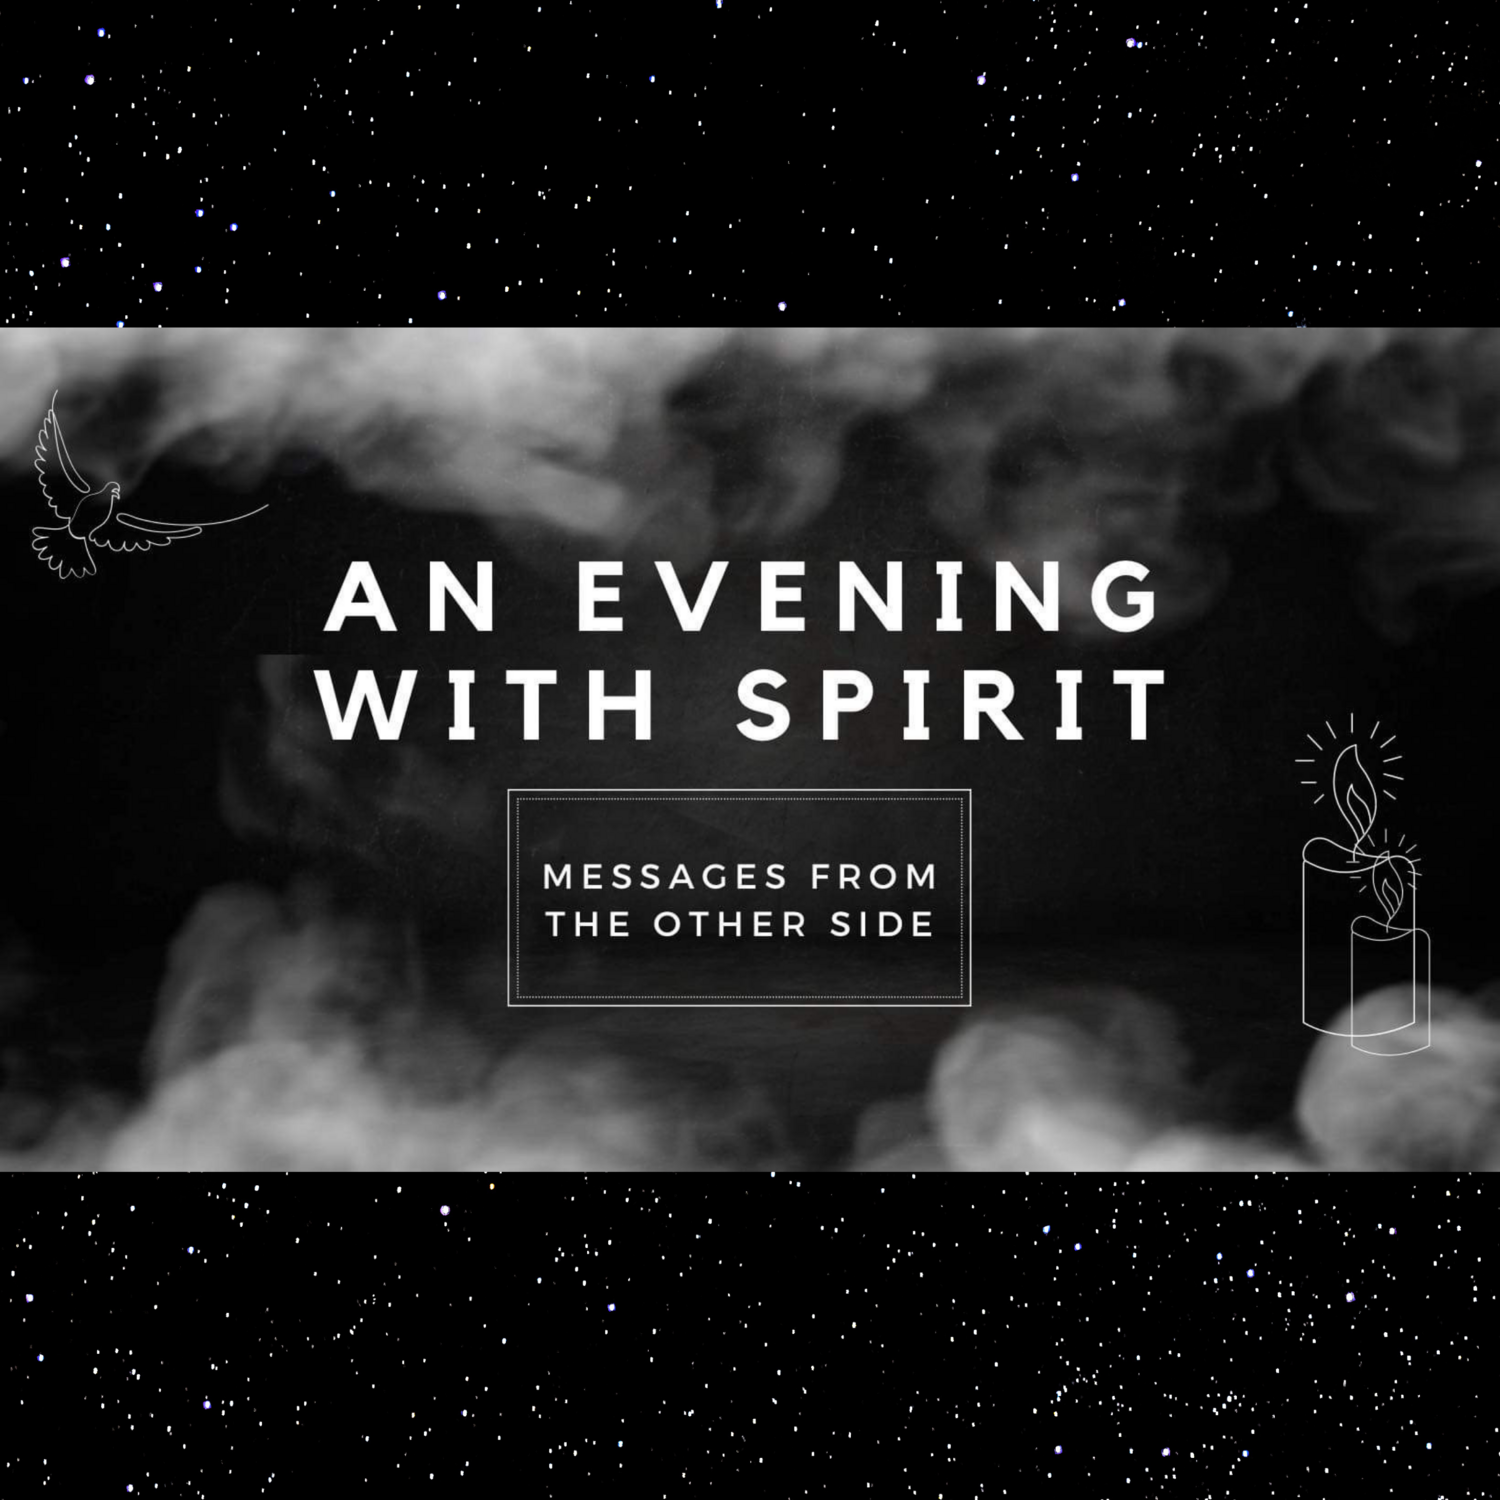 An Evening with Spirit - Wednesday, December 6th